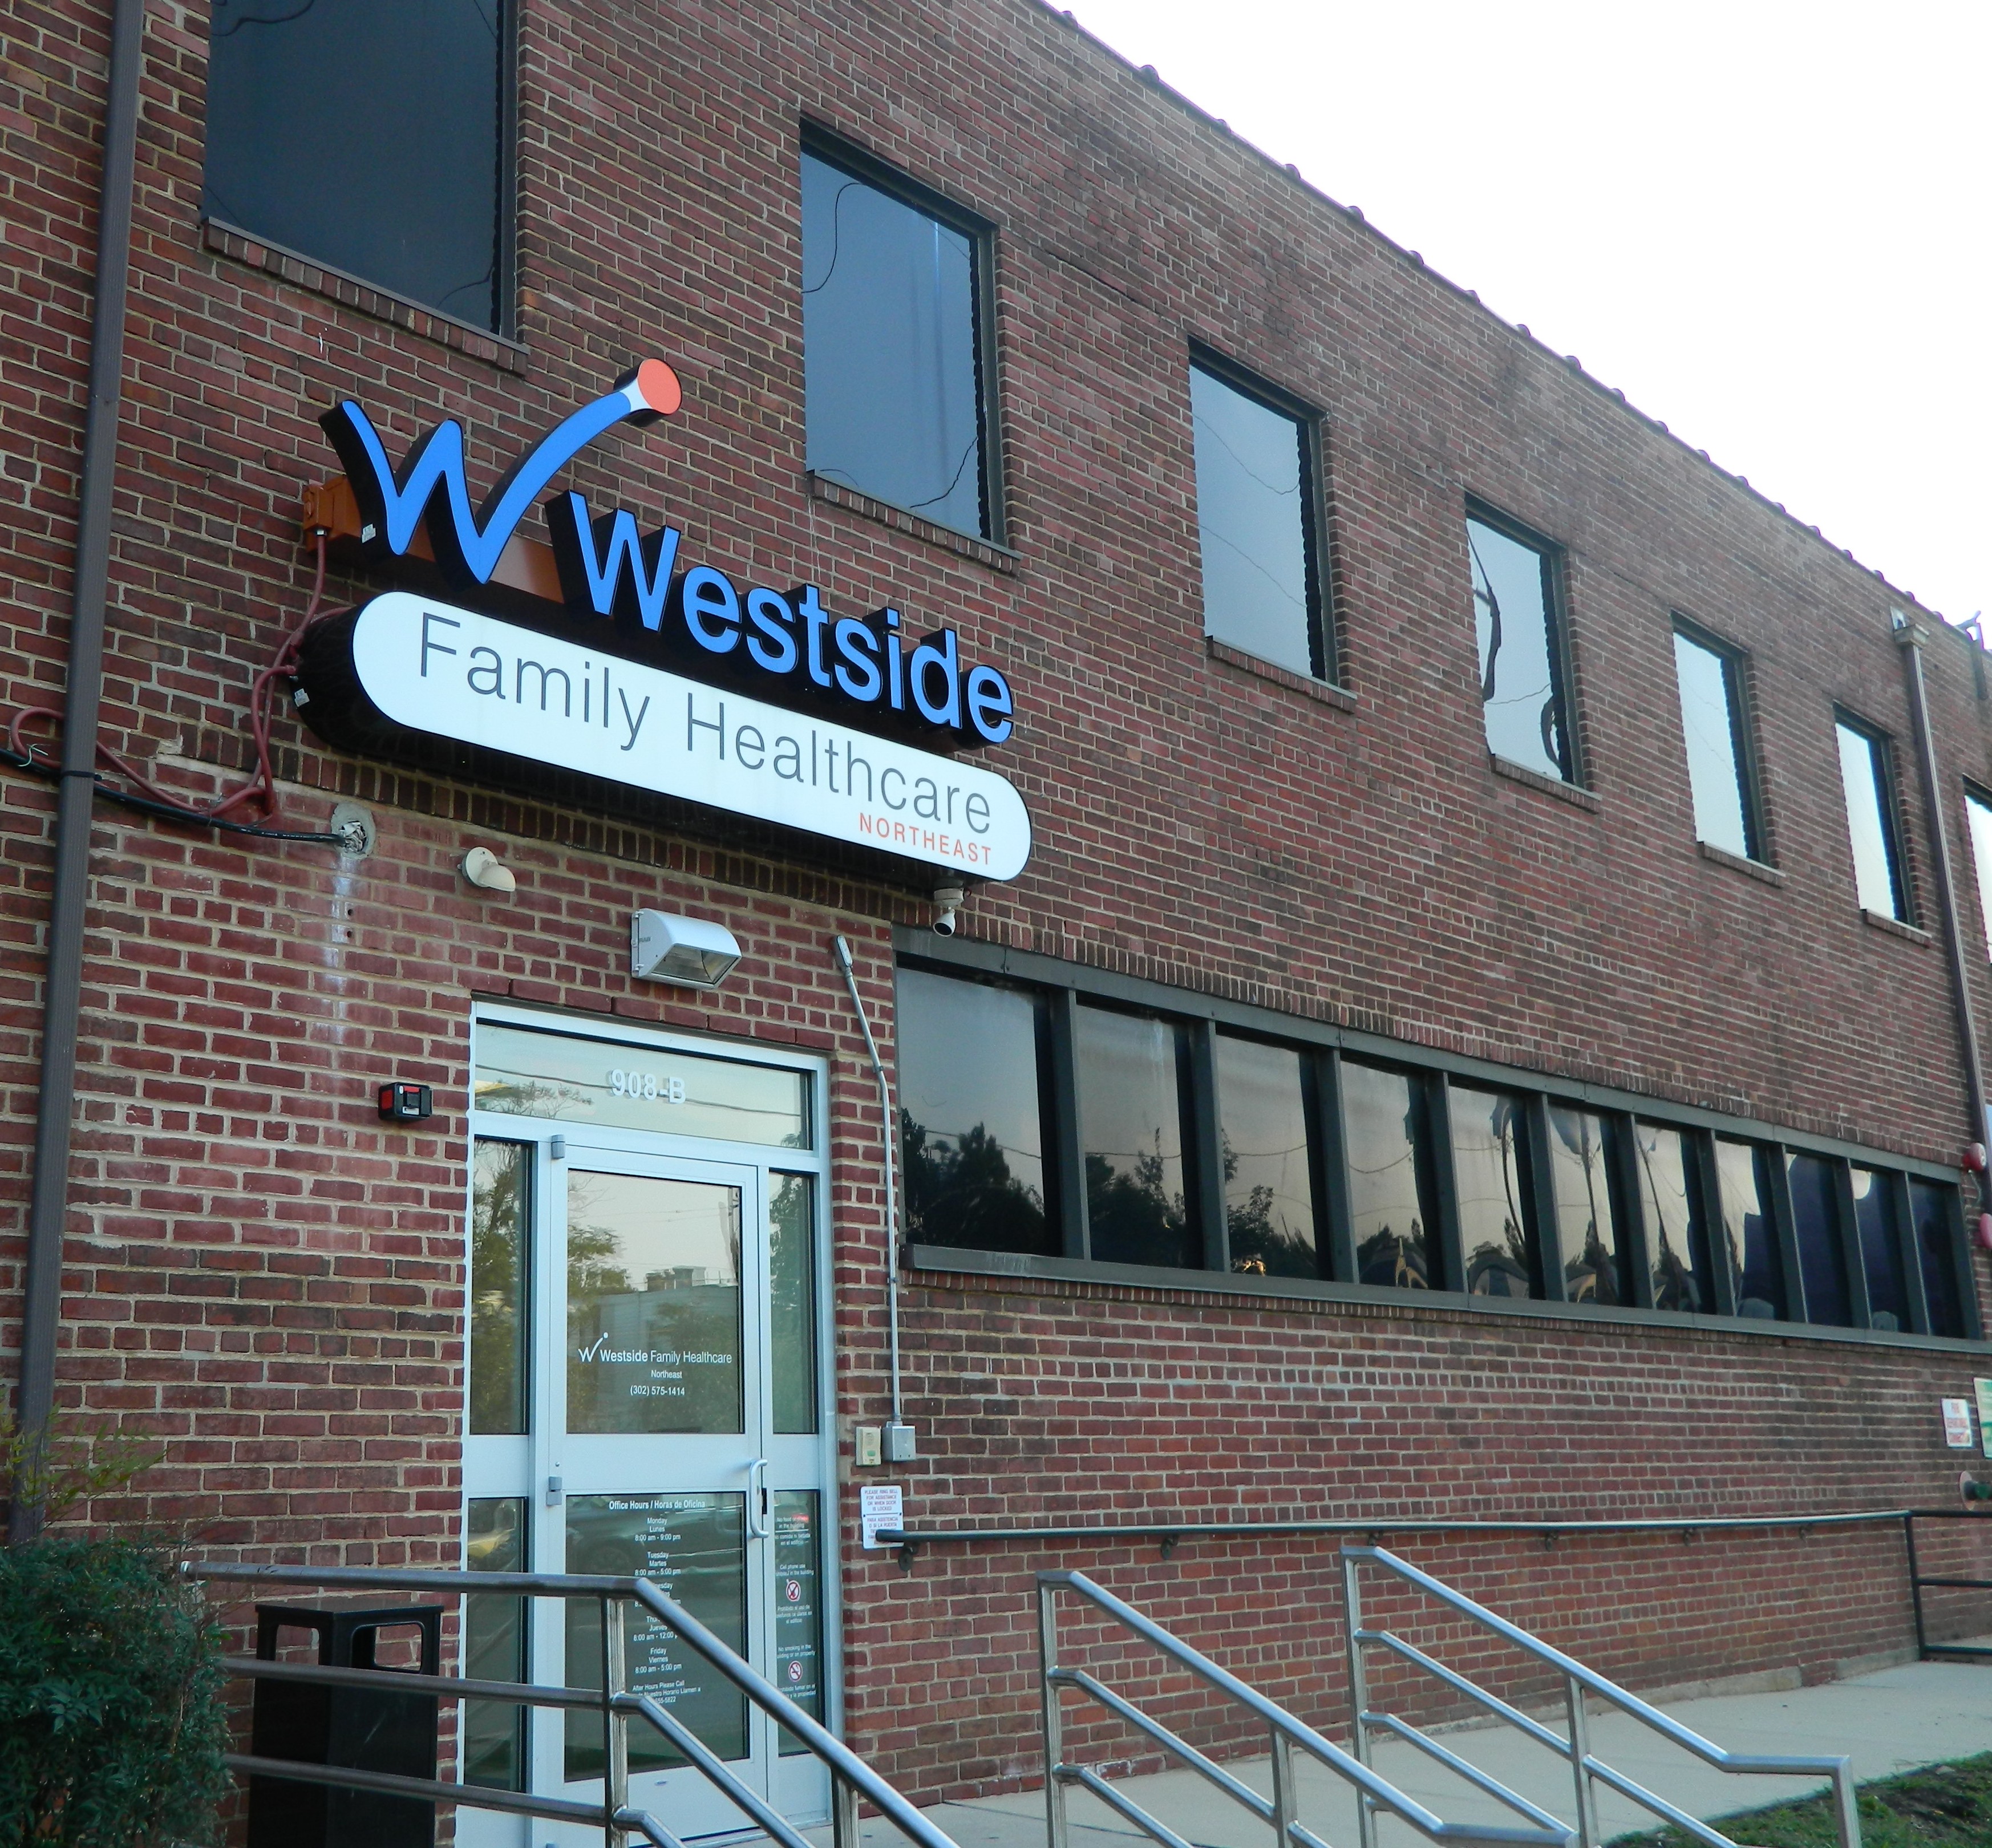 Westside Family Healthcare - Northeast Dental